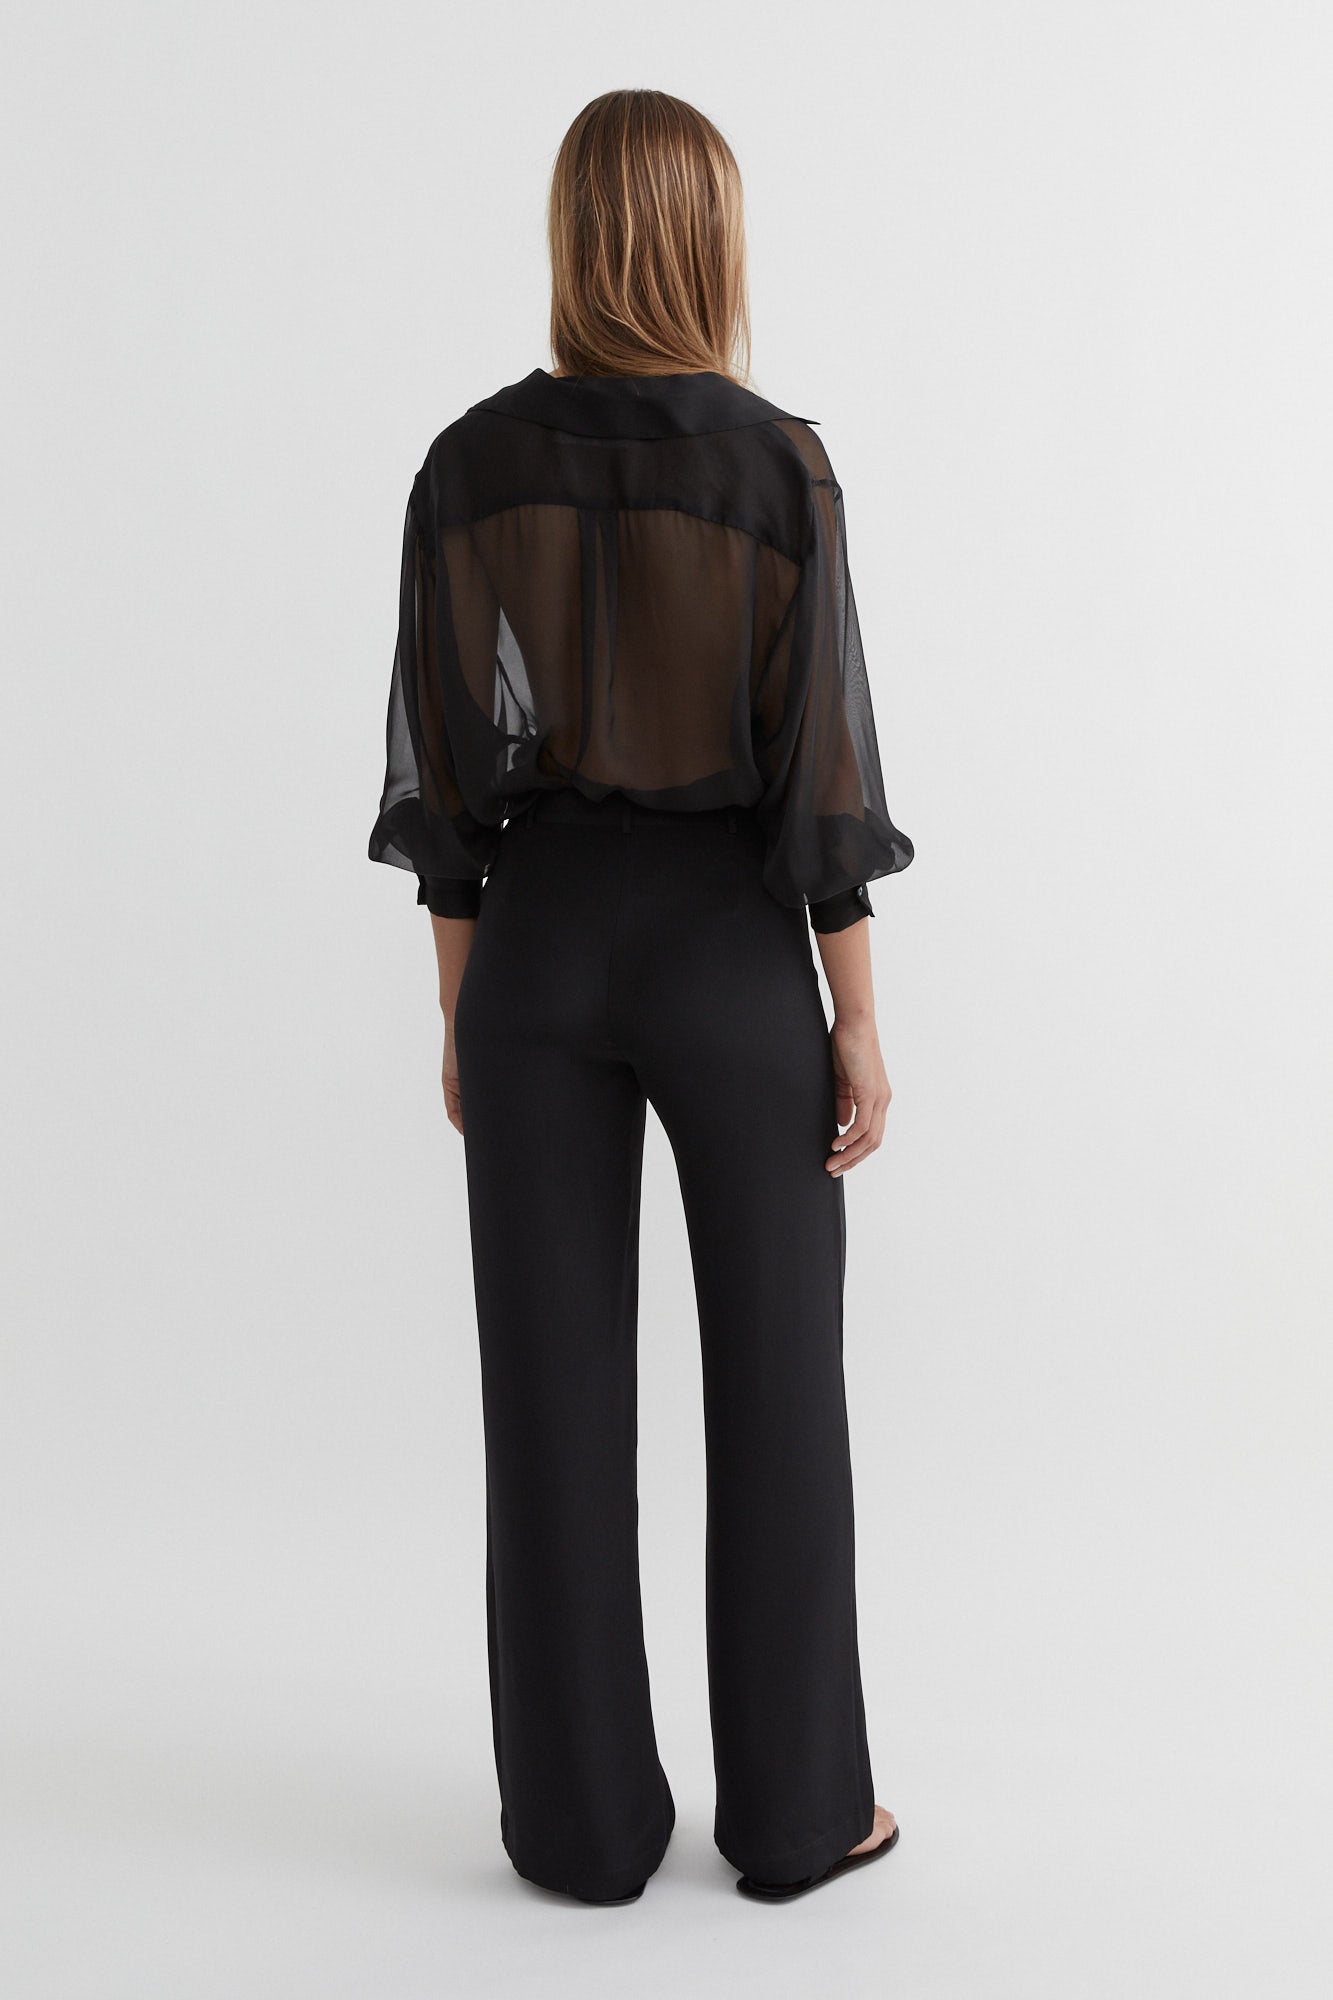 SAINT Lookbook Classic Silk Shirt in black sheer chiffon, long sleeve button up. Made in Australia